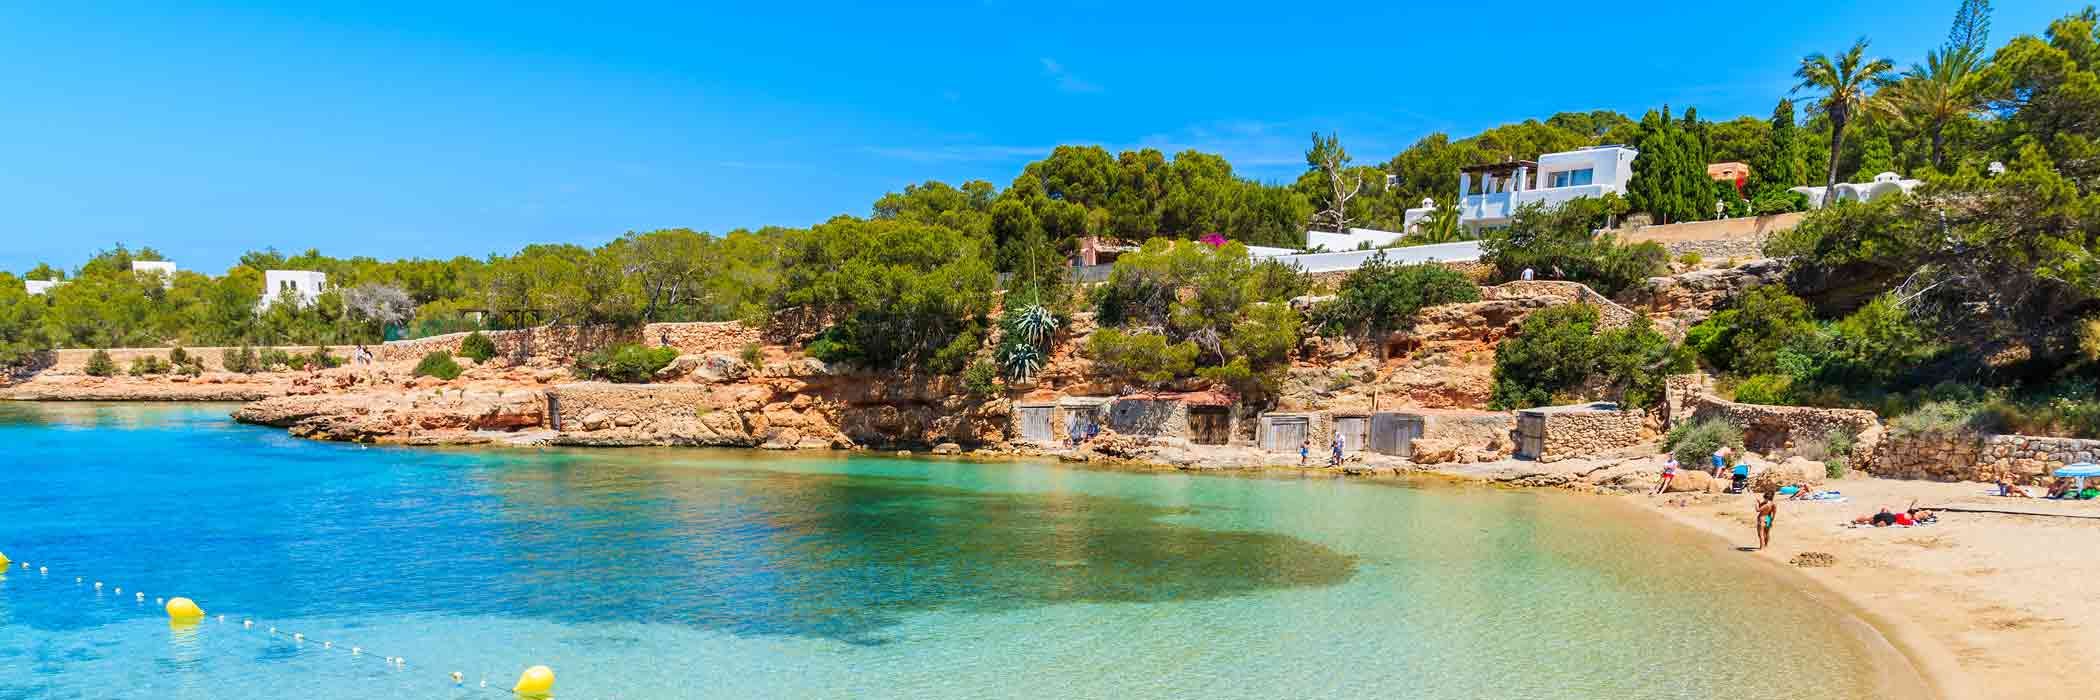 Cala Gracio Holidays, Ibiza